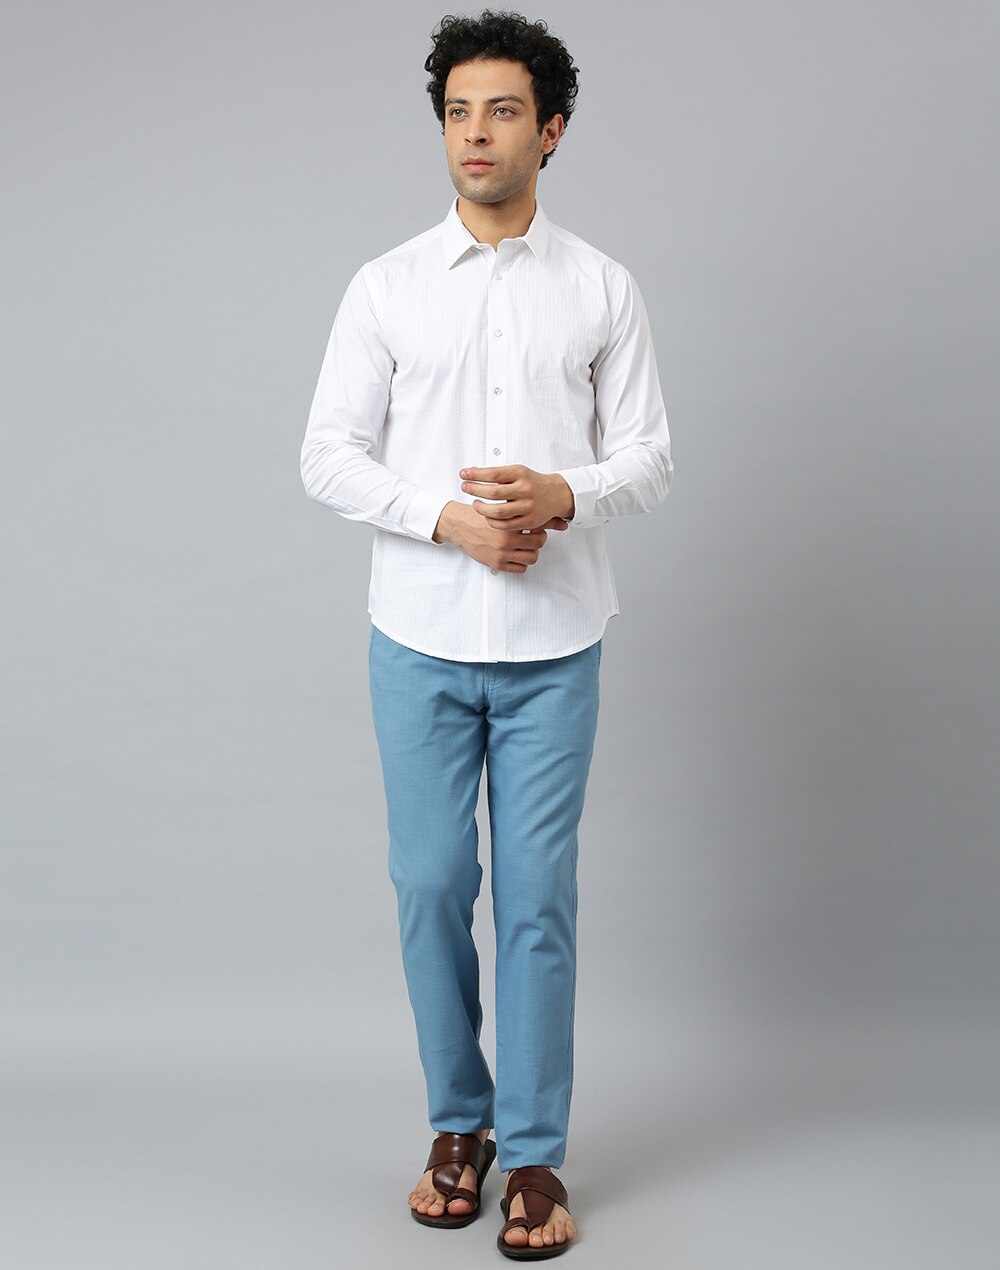 Buy White Cotton Slim Fit Shirt for Men Online at Fabindia | 10728096